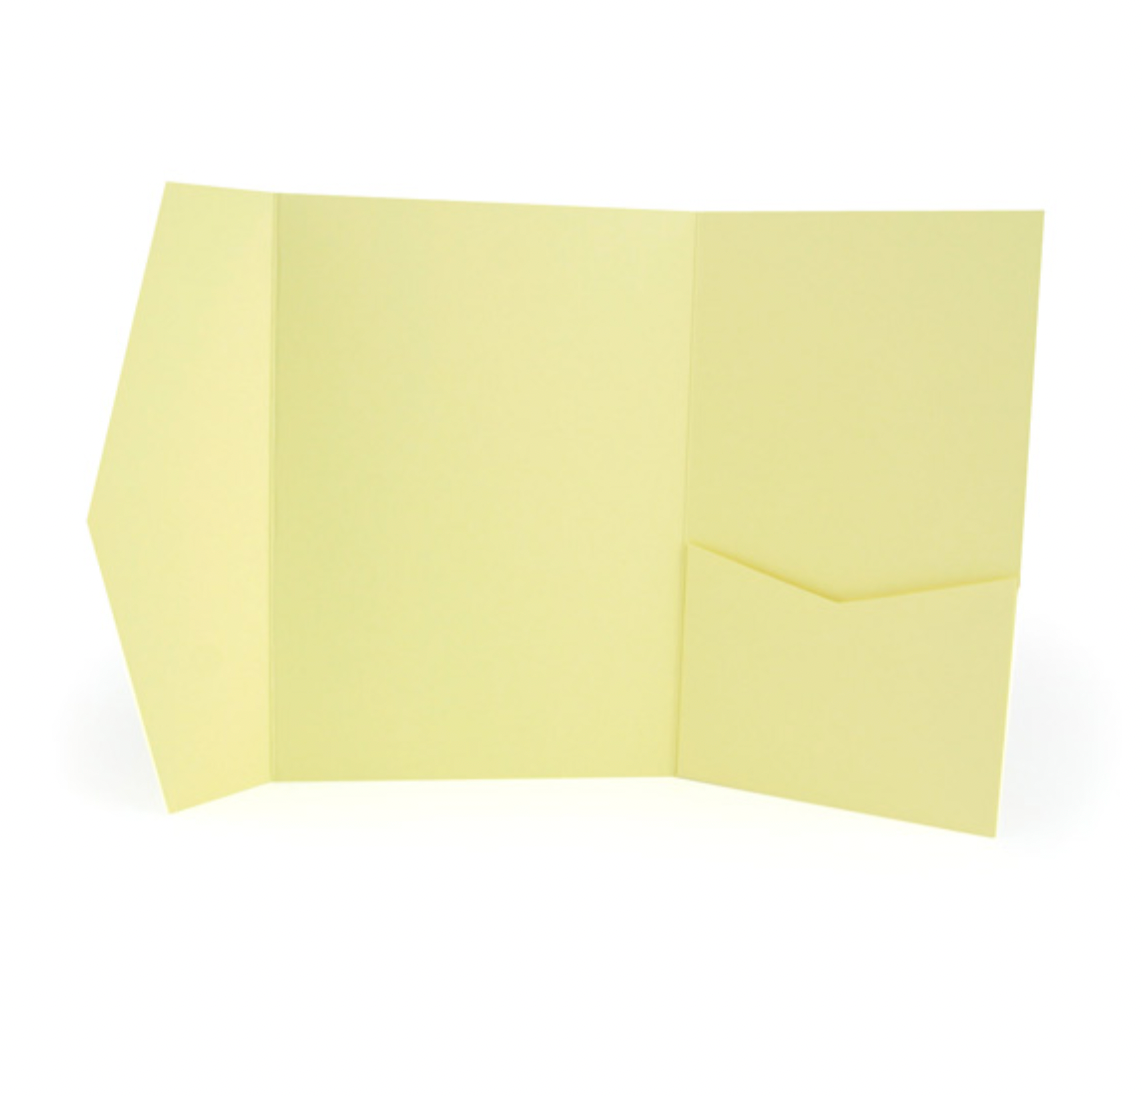 A7 Pocket envelope light yellow